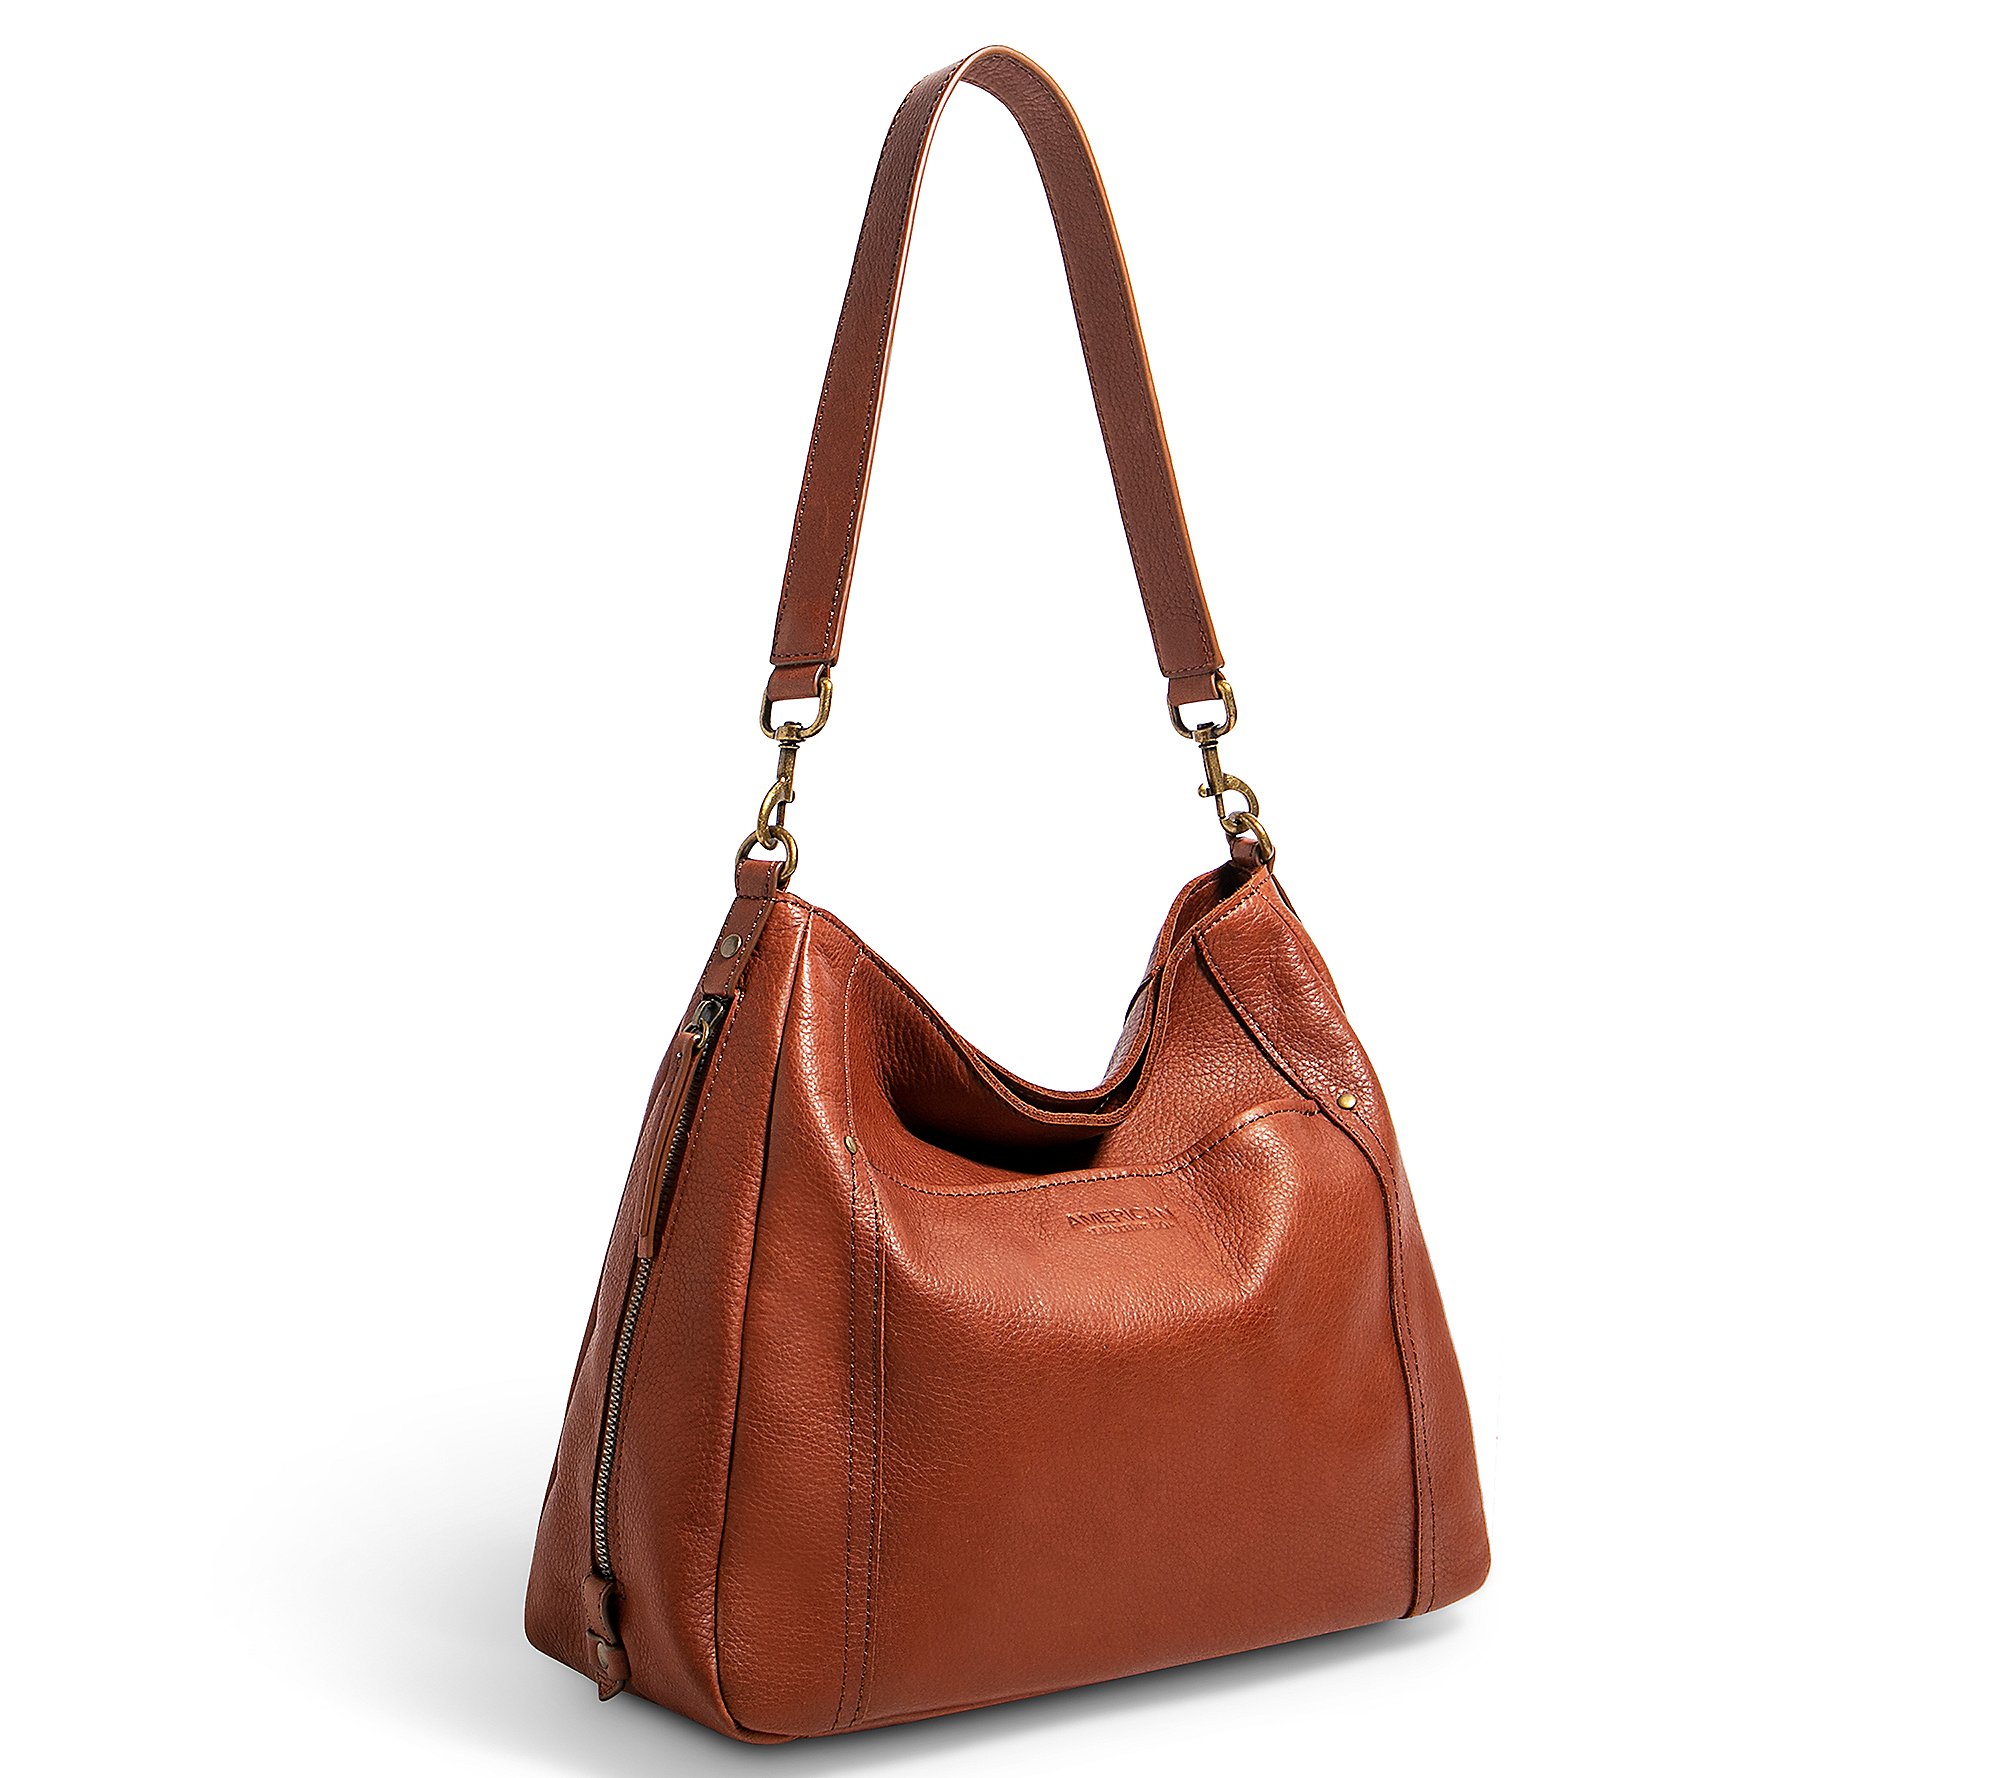 American Leather Co. Austin Shoulder Bag - QVC.com